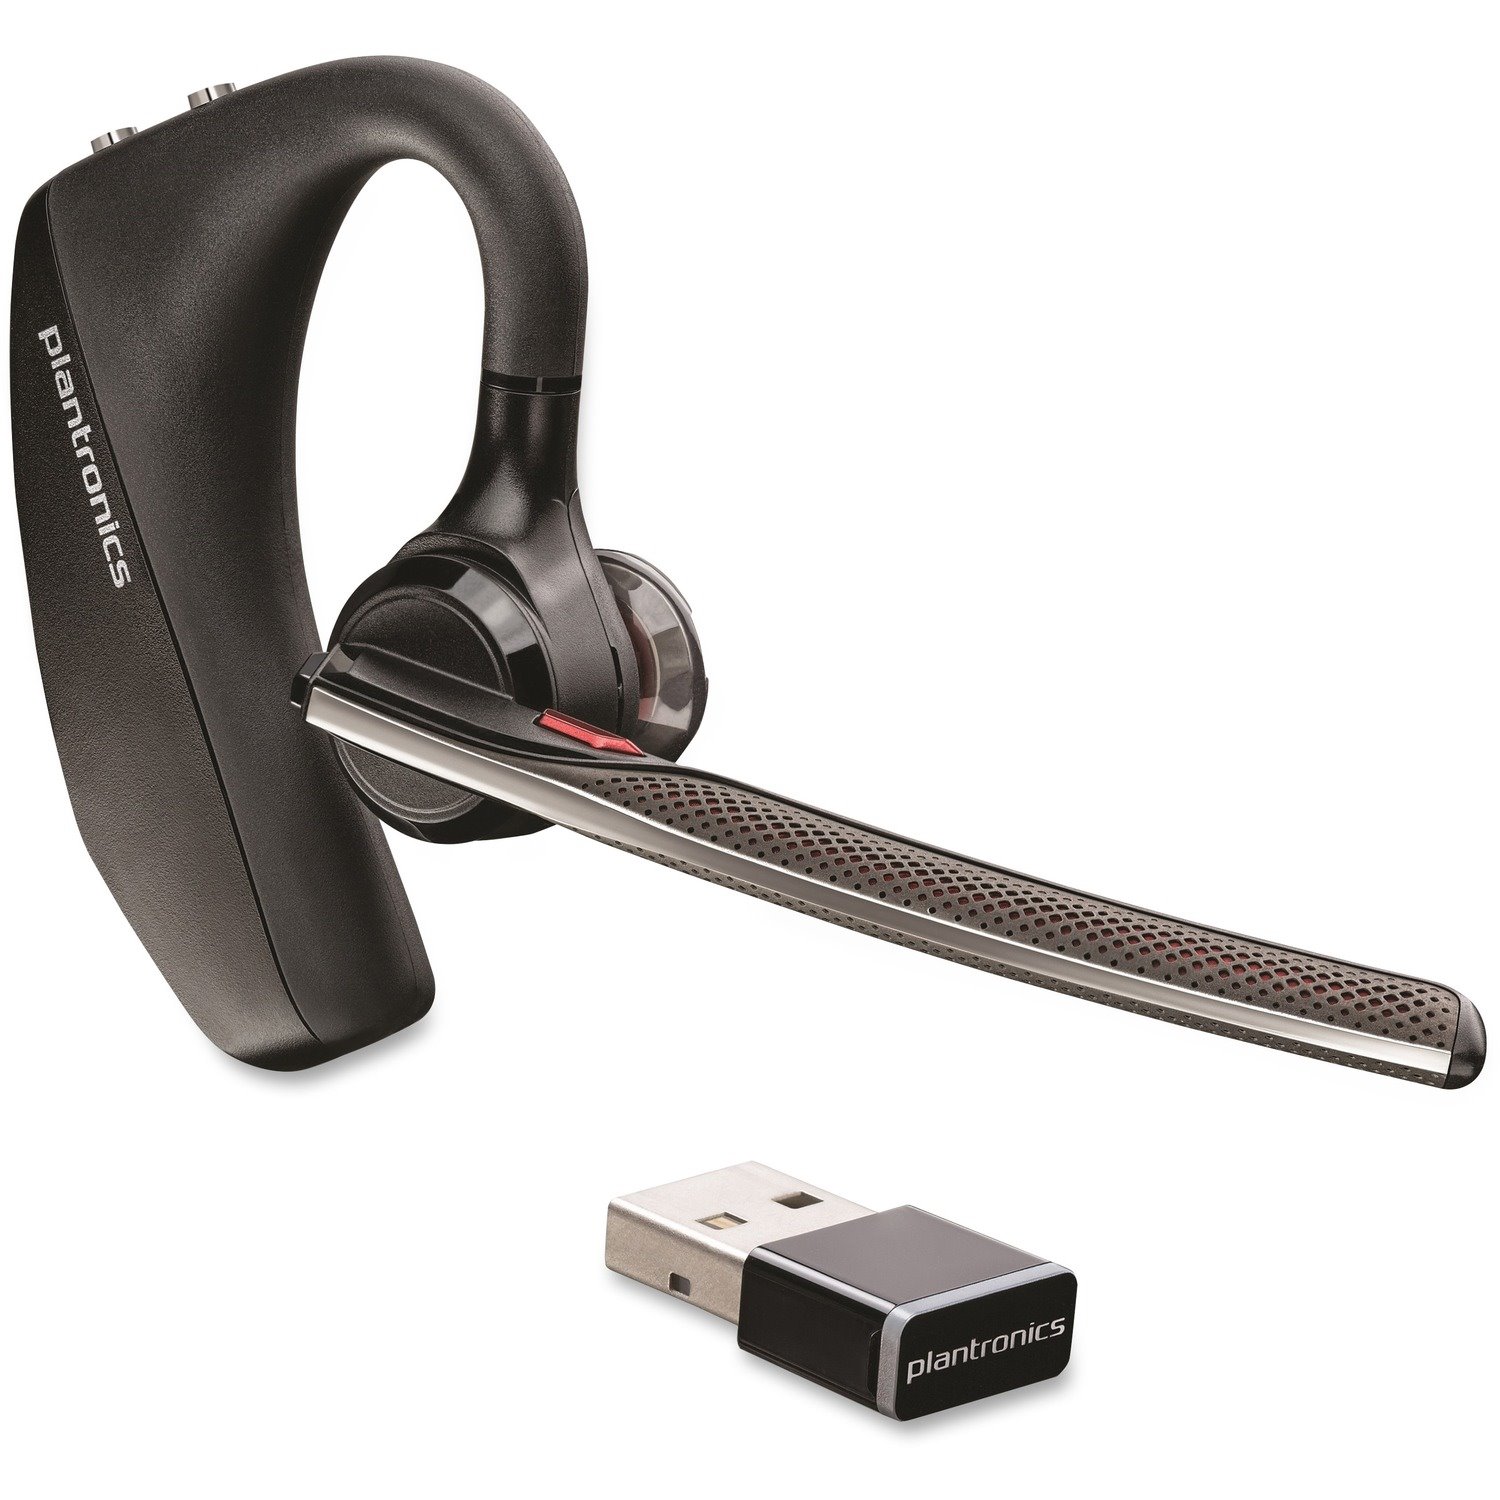 Plantronics Voyager Wireless Behind-the-ear Mono Earset - Black, Chrome